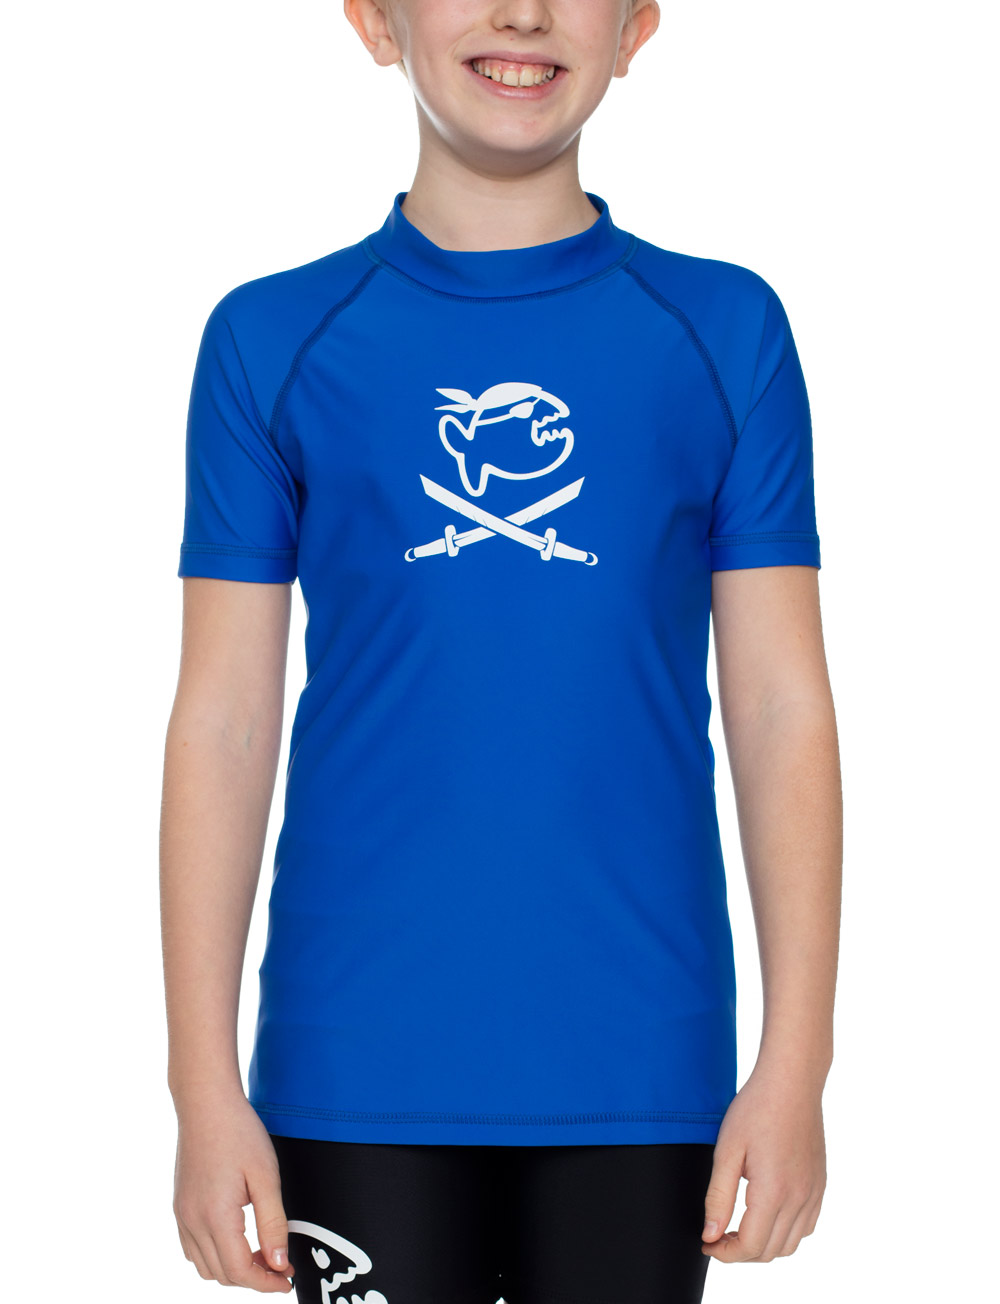 Kinder-Shirt UV-Schutz-UPF 50+ blau Piraten